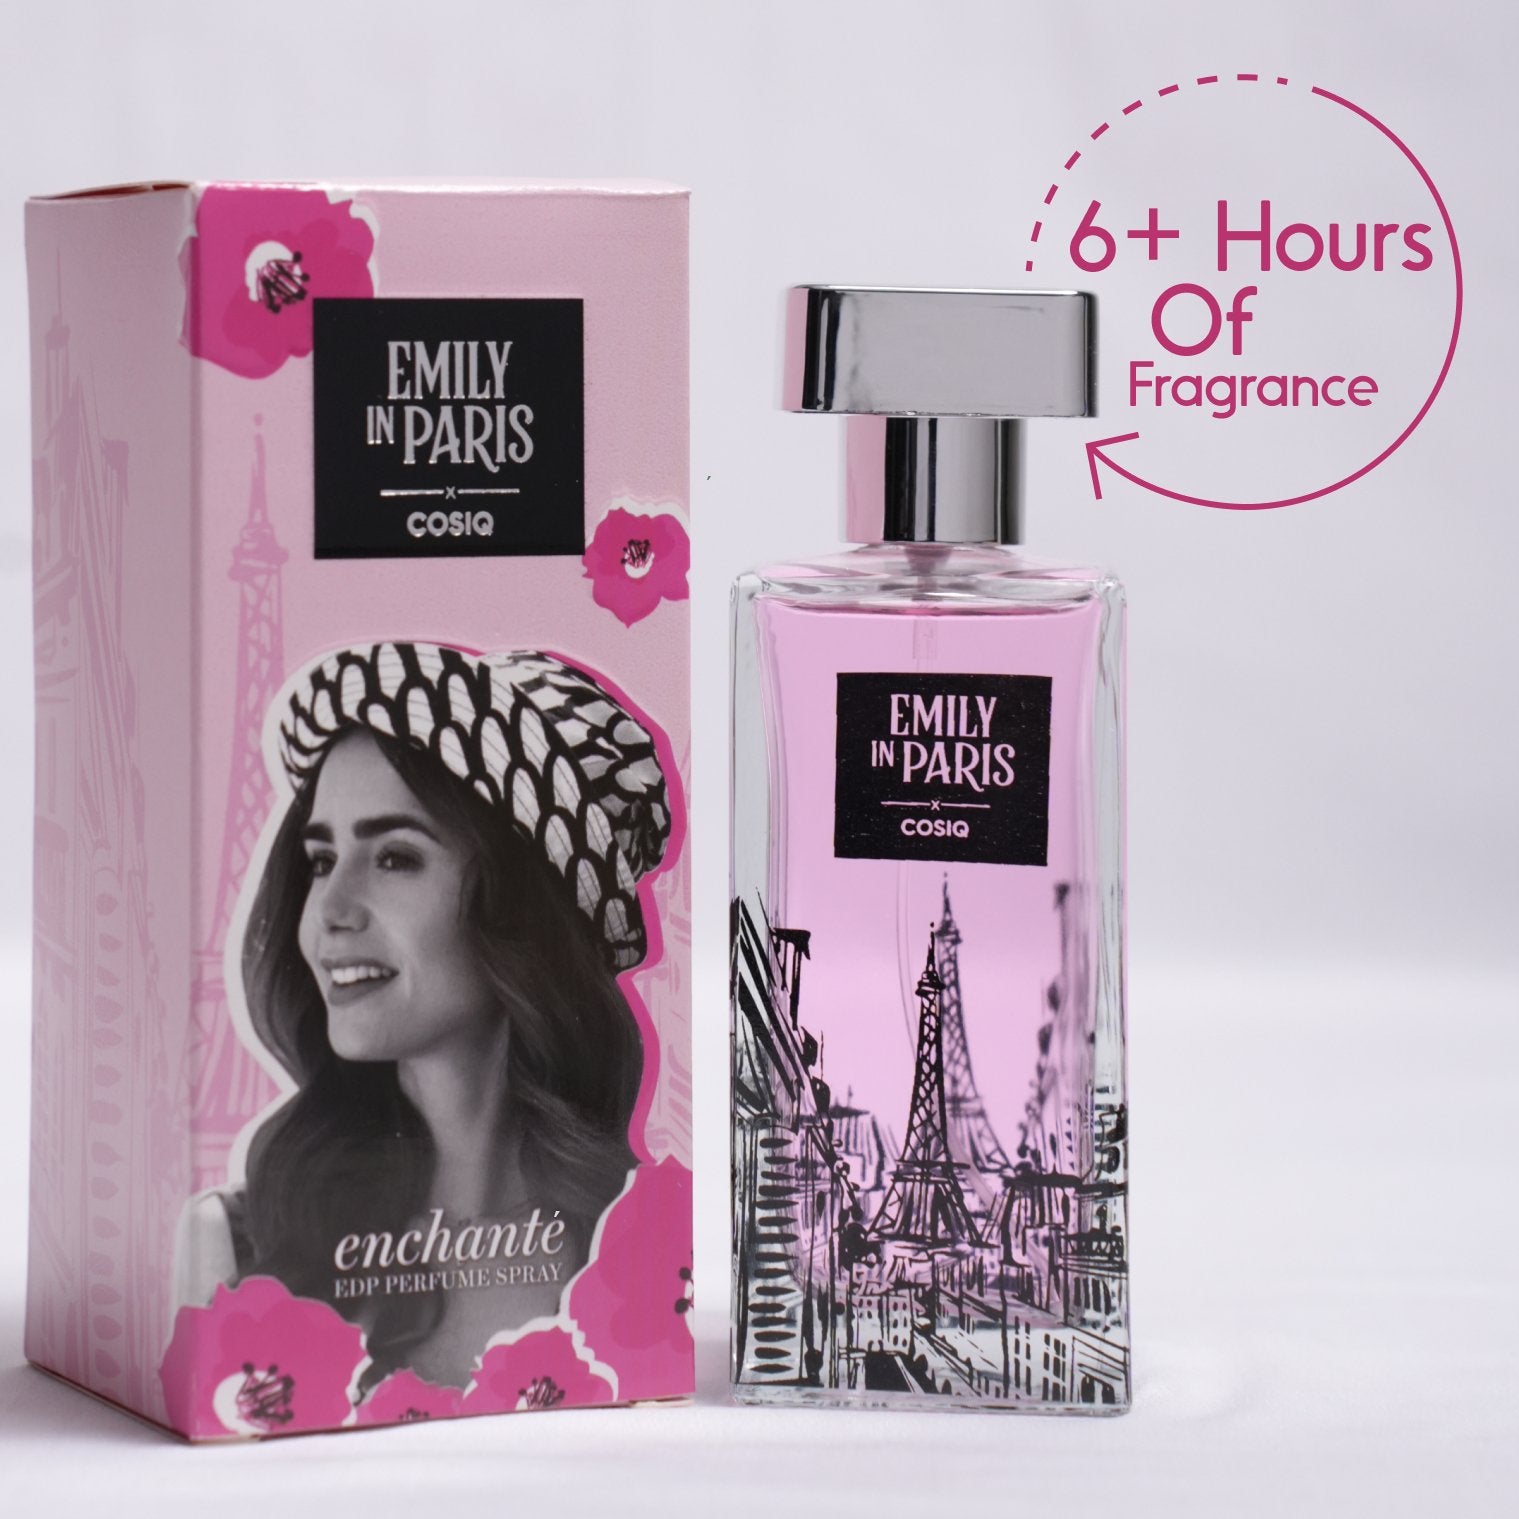 Emily's Enchanté EDP Perfume, 100ml - CosIQ